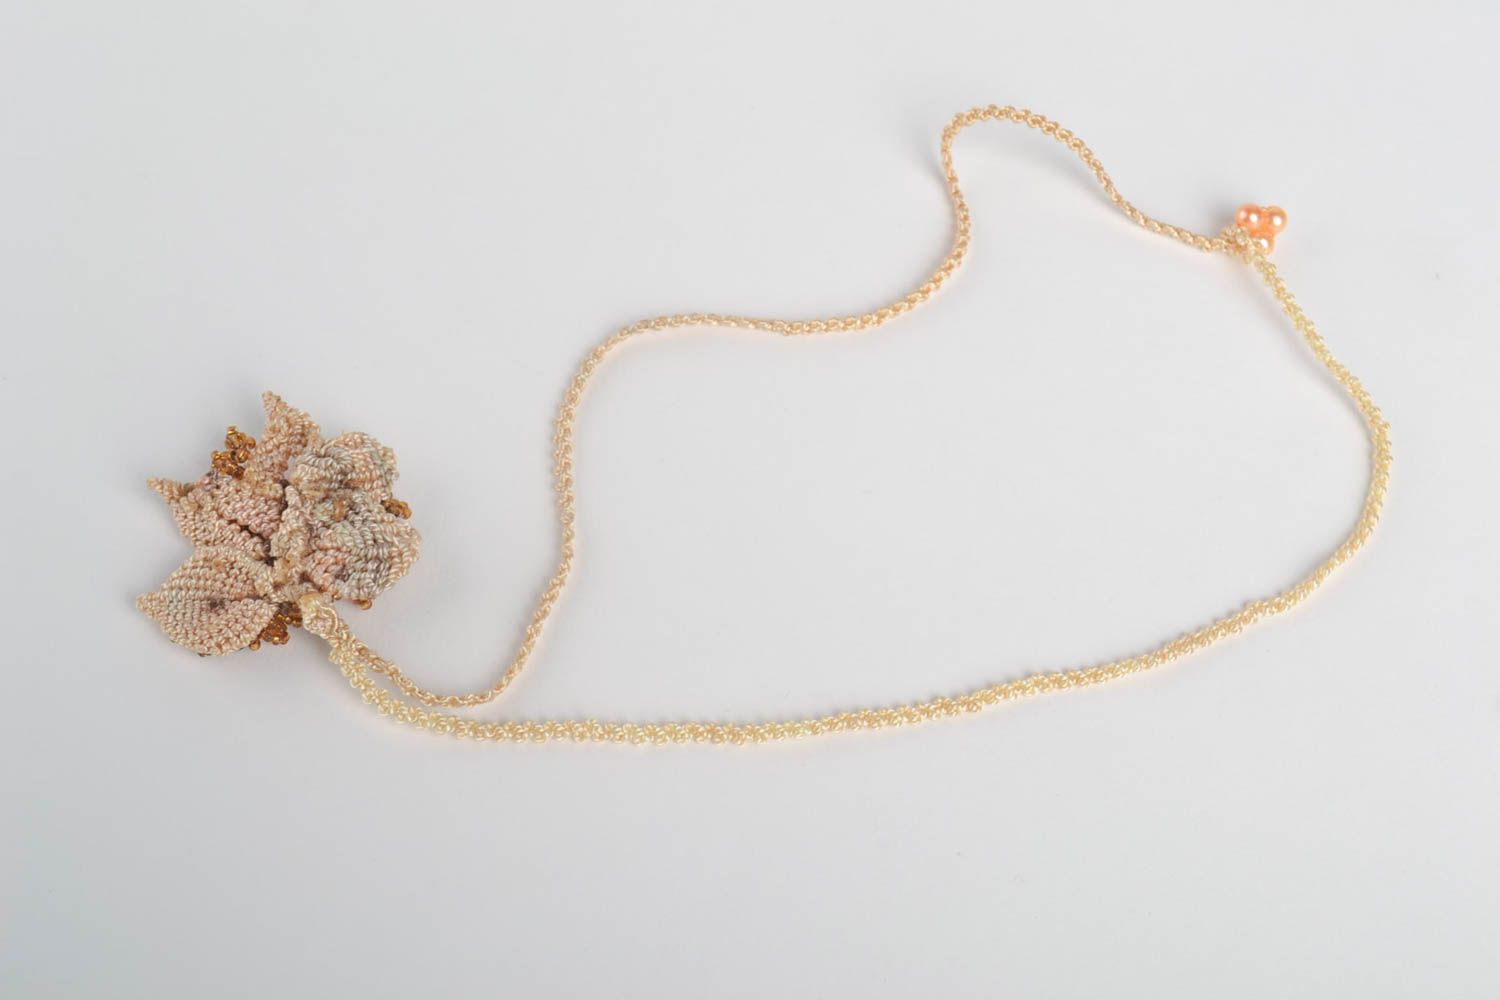 Handmade pendant designer pendant unusual accessory macrame jewelry gift ideas photo 4